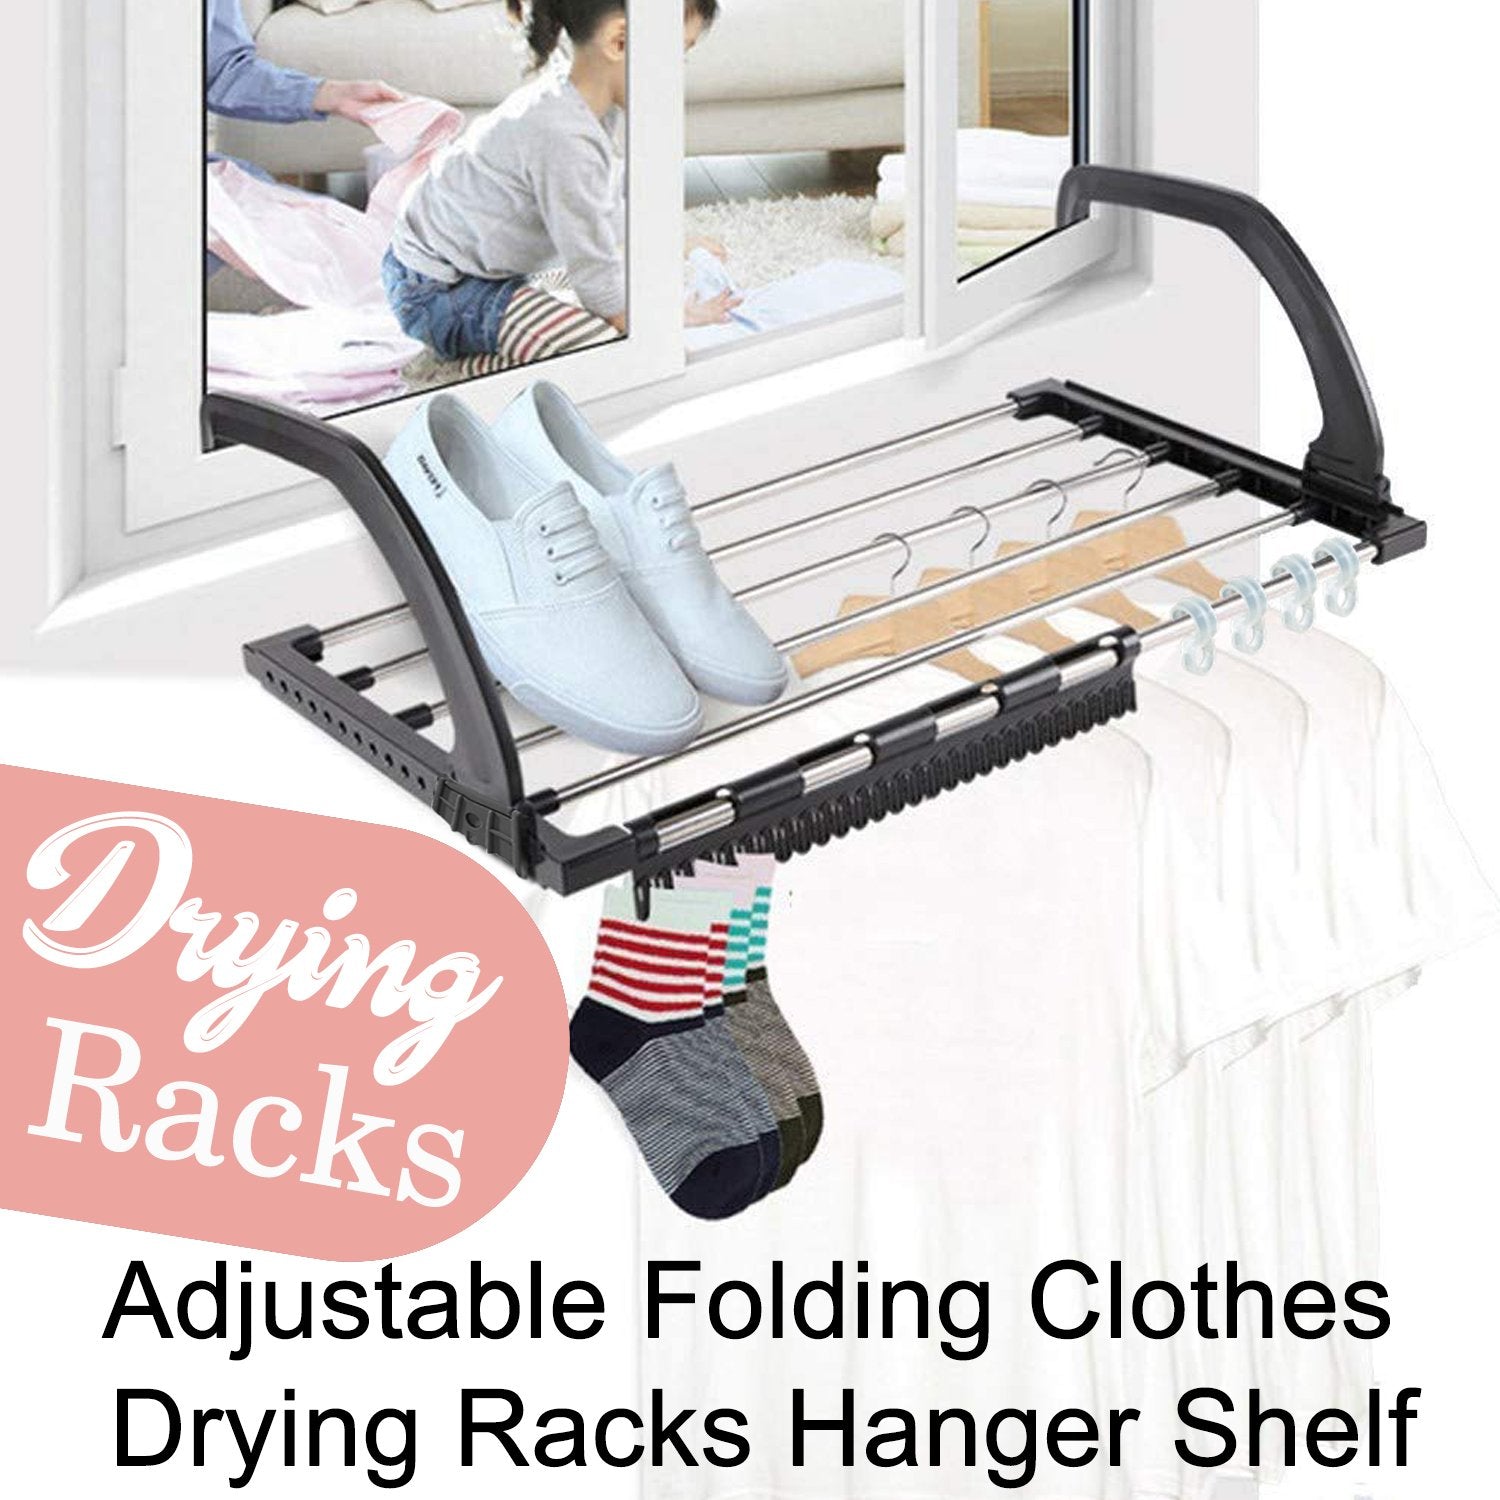 4649 Adjustable Folding Clothes Drying Racks Hanger Shelf